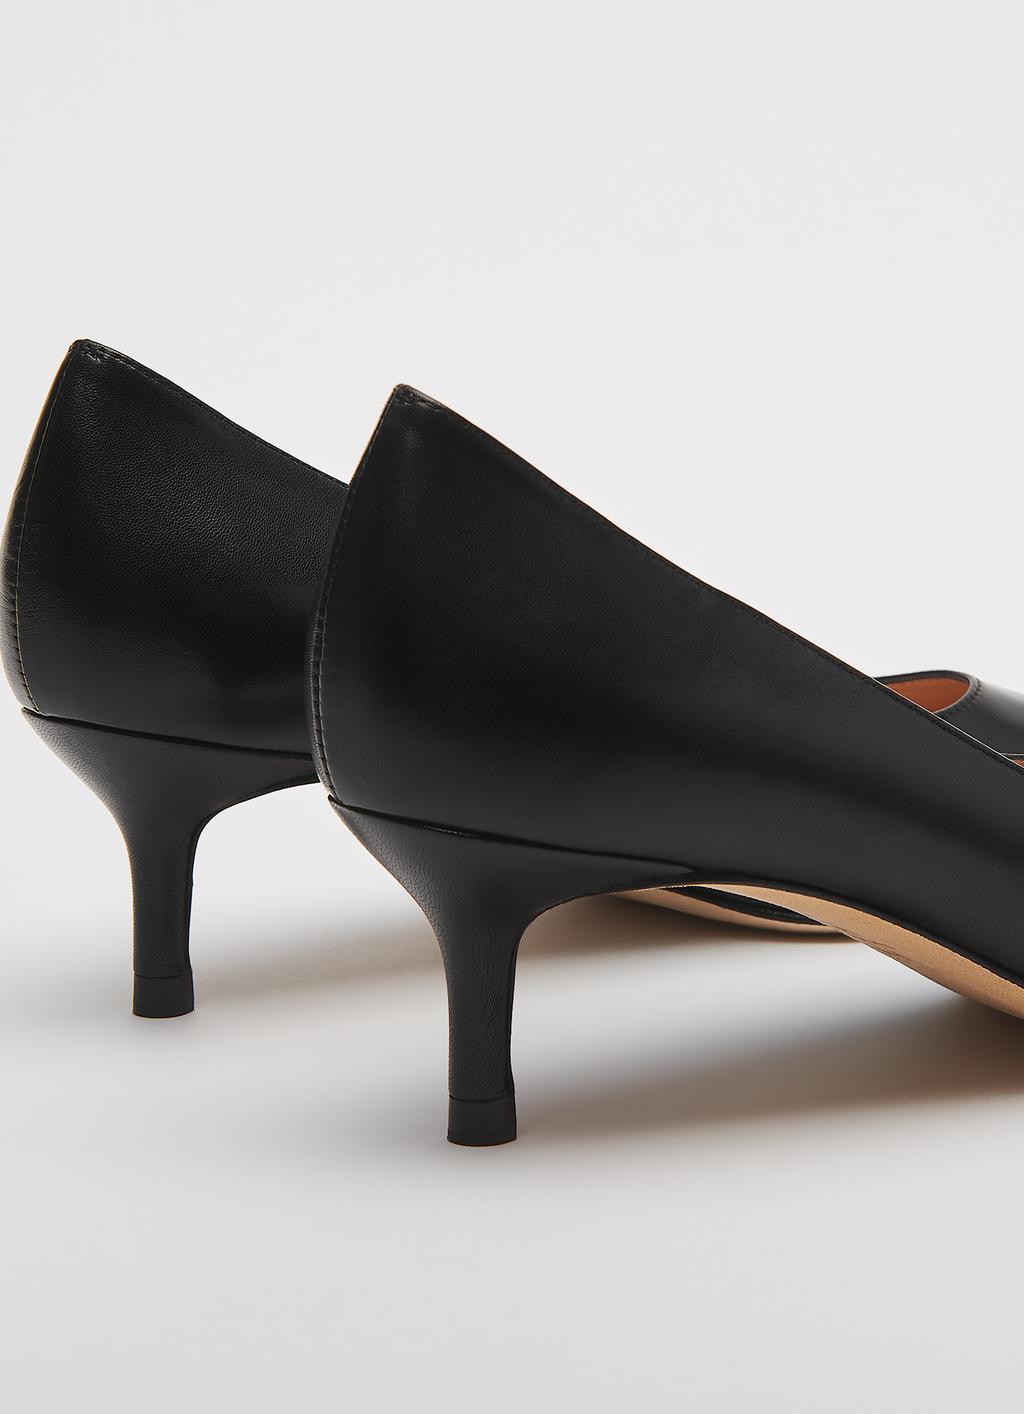 Audrey Black Leather Kitten Heel Courts | Shoes | L.K.Bennett